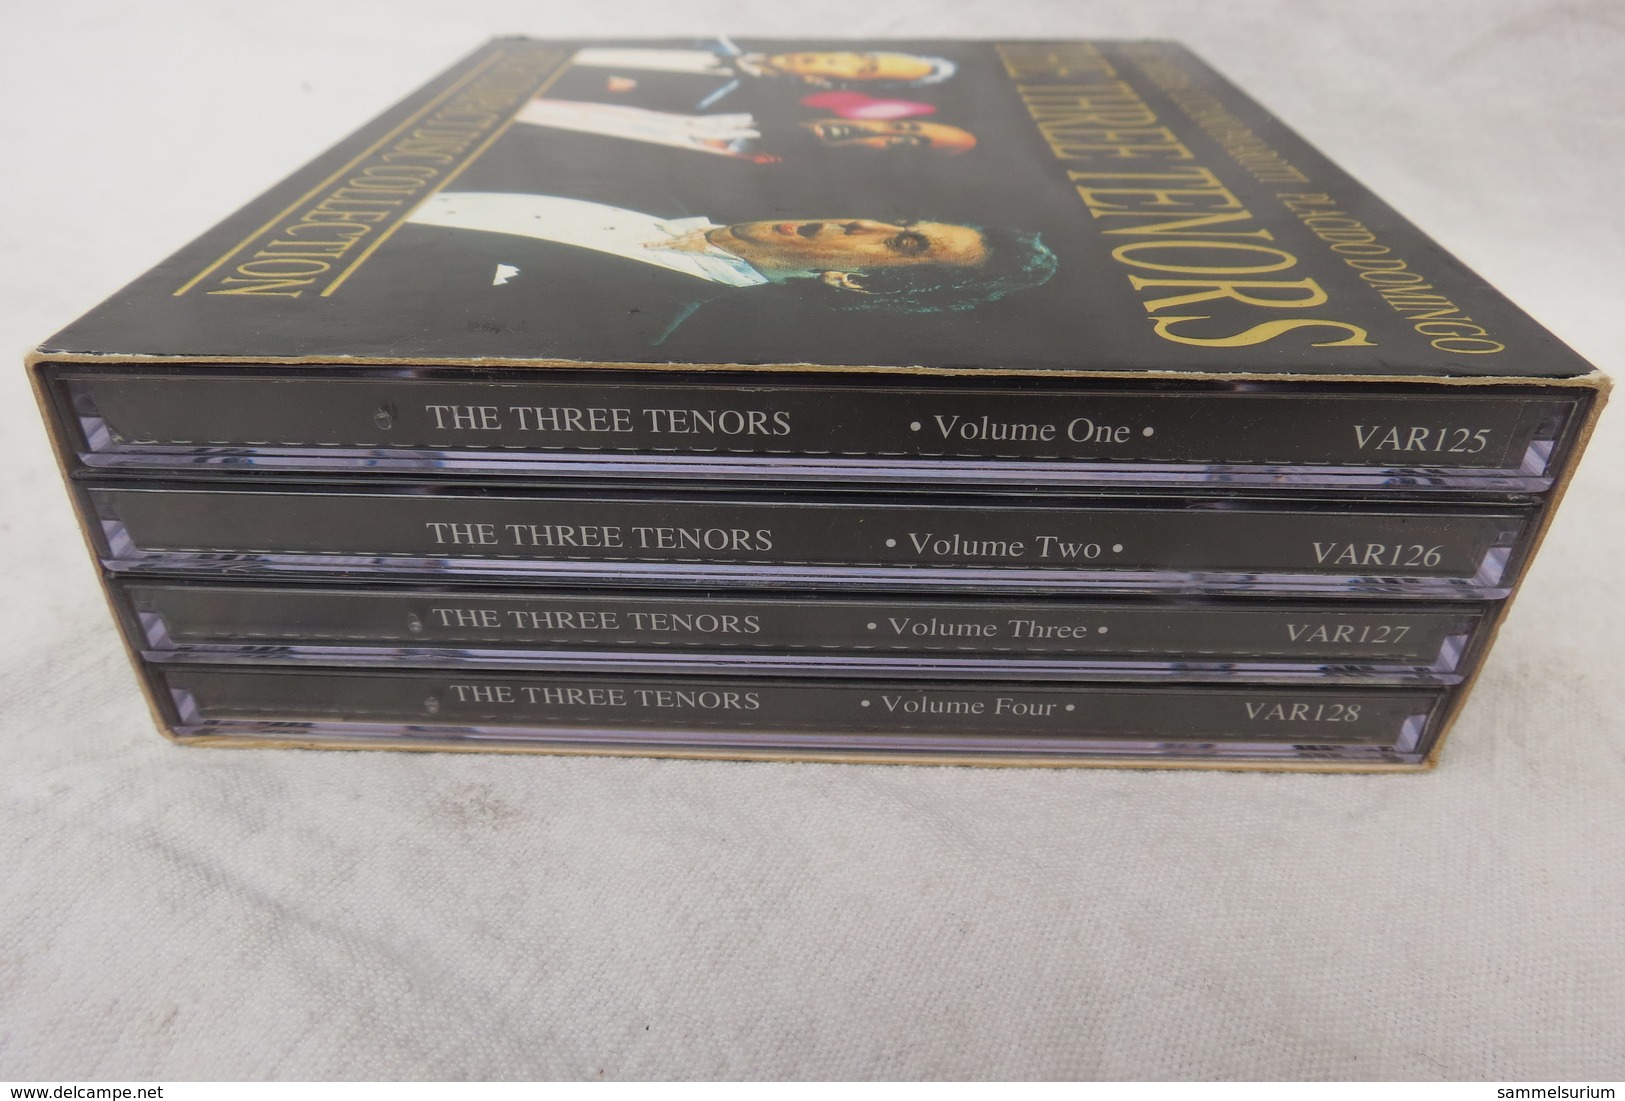 4 CDs "The Three Tenors" Jose Carreras, Luciano Pavarotti, Placido Domingo - Opera